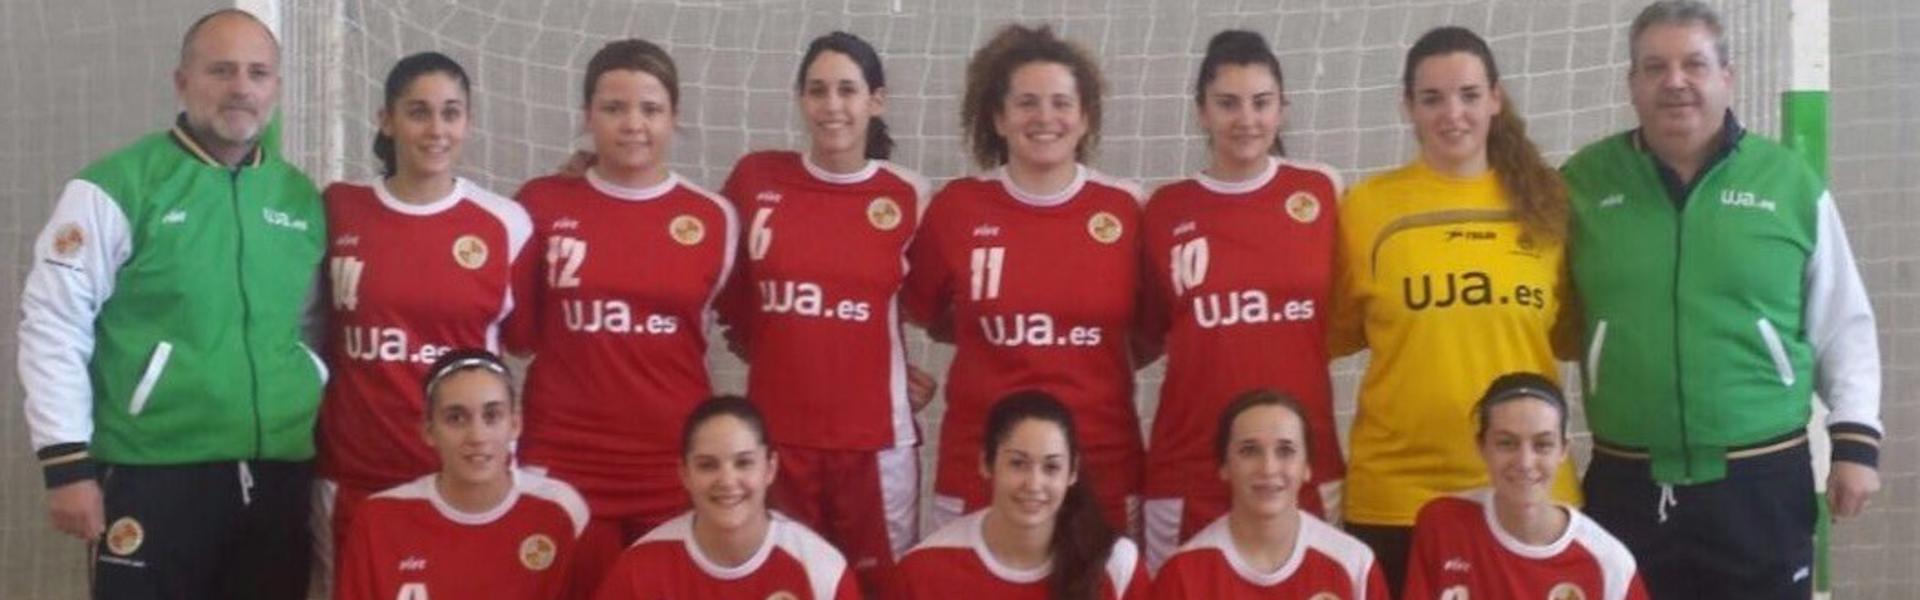 Campeonato de Andalucía Universitario de Fútbol Sala femenino